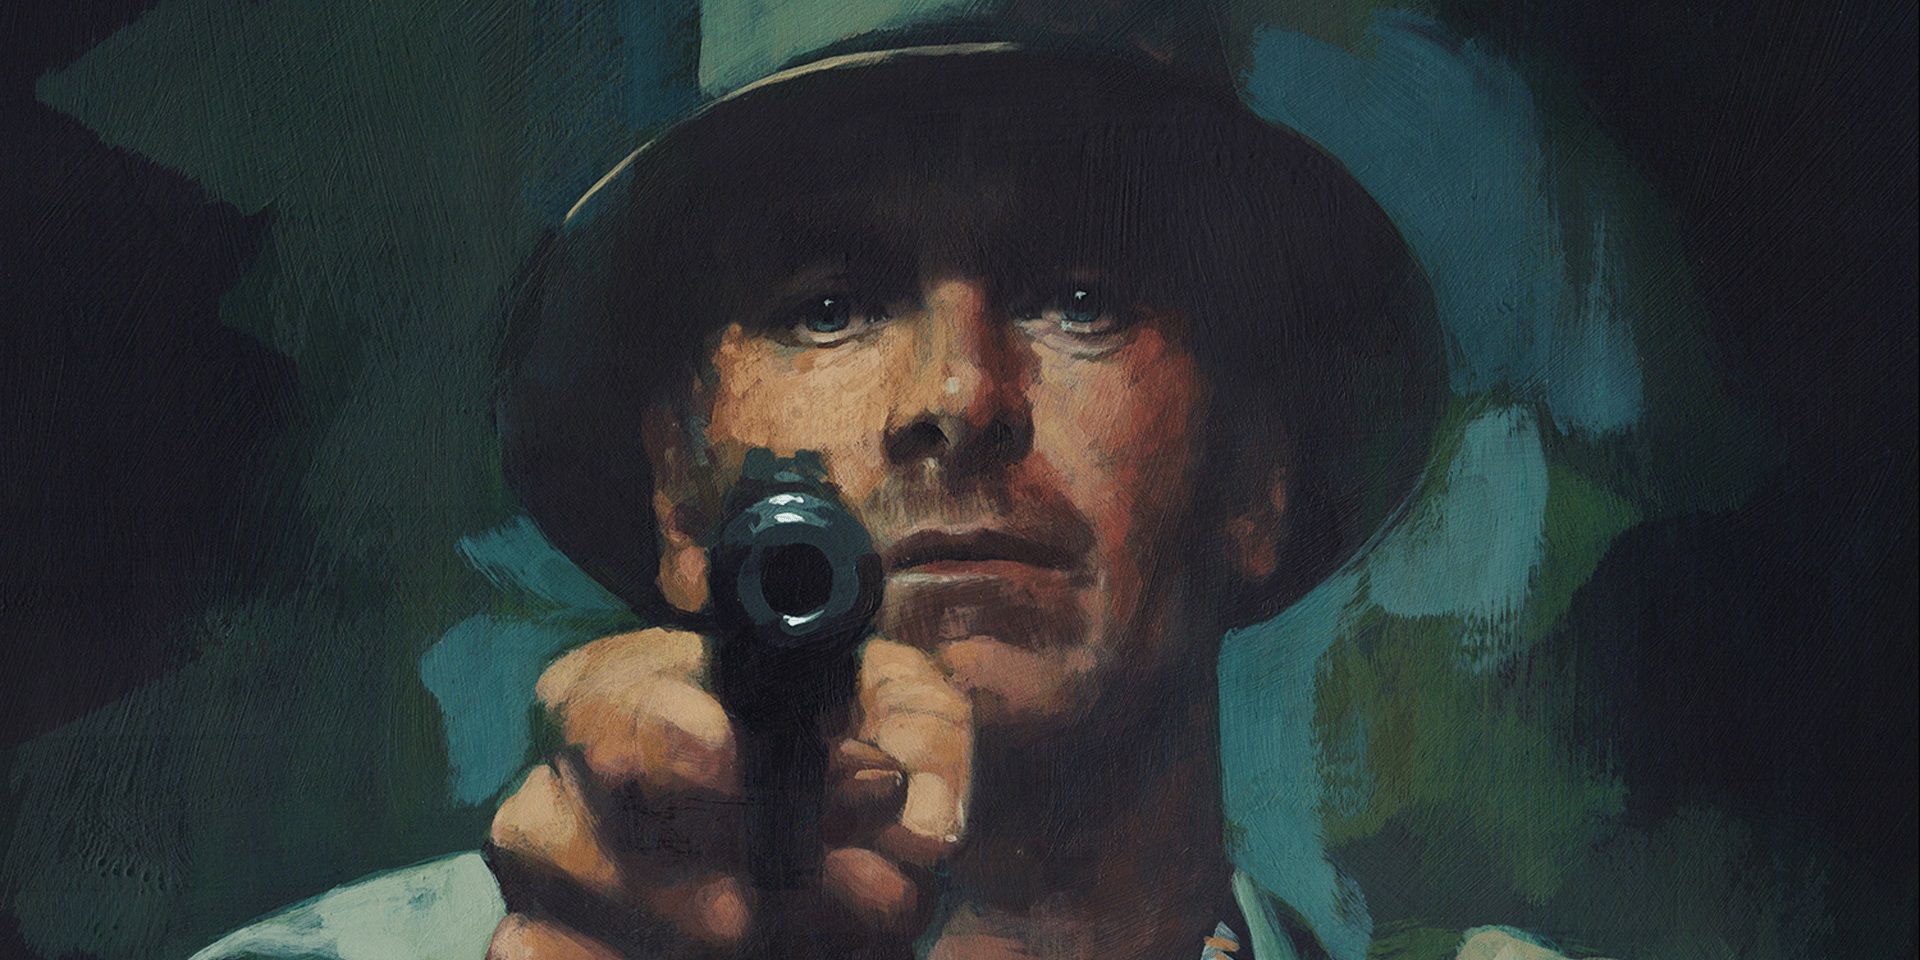 Michael Fassbender on the poster for The Killer